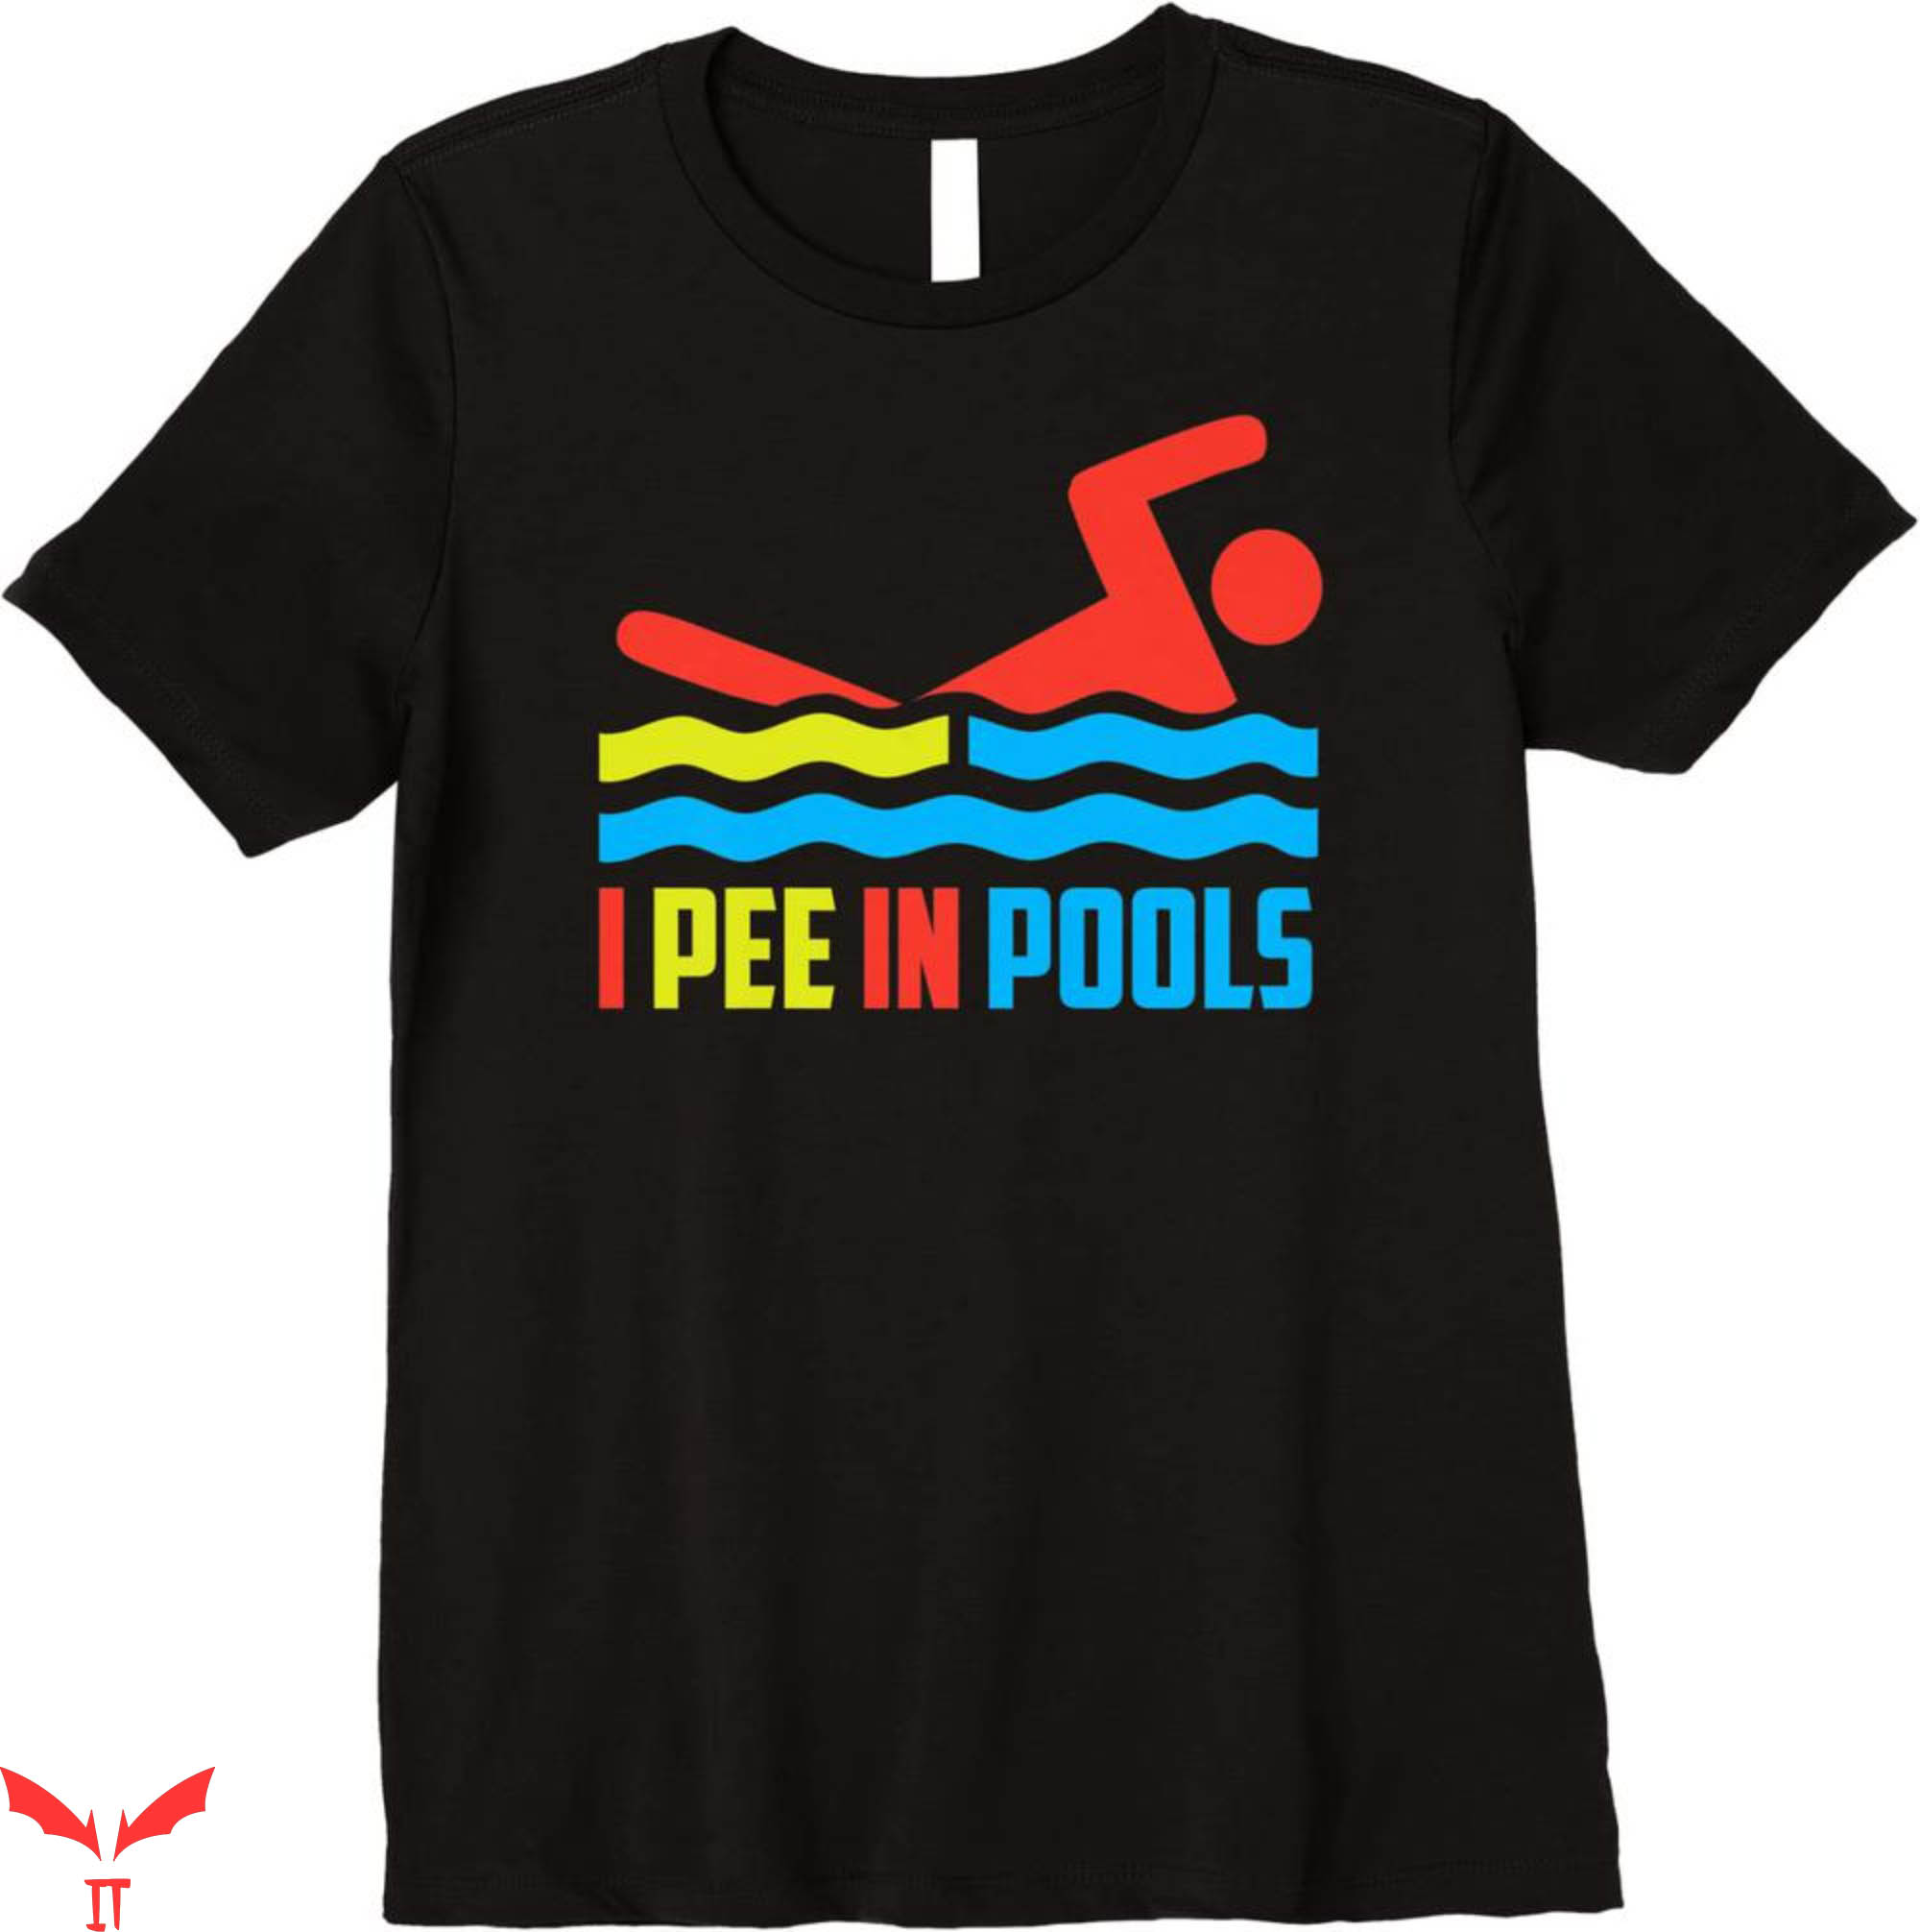 I Pee In Pools T-Shirt Cool Style Funny Pool Meme Tee